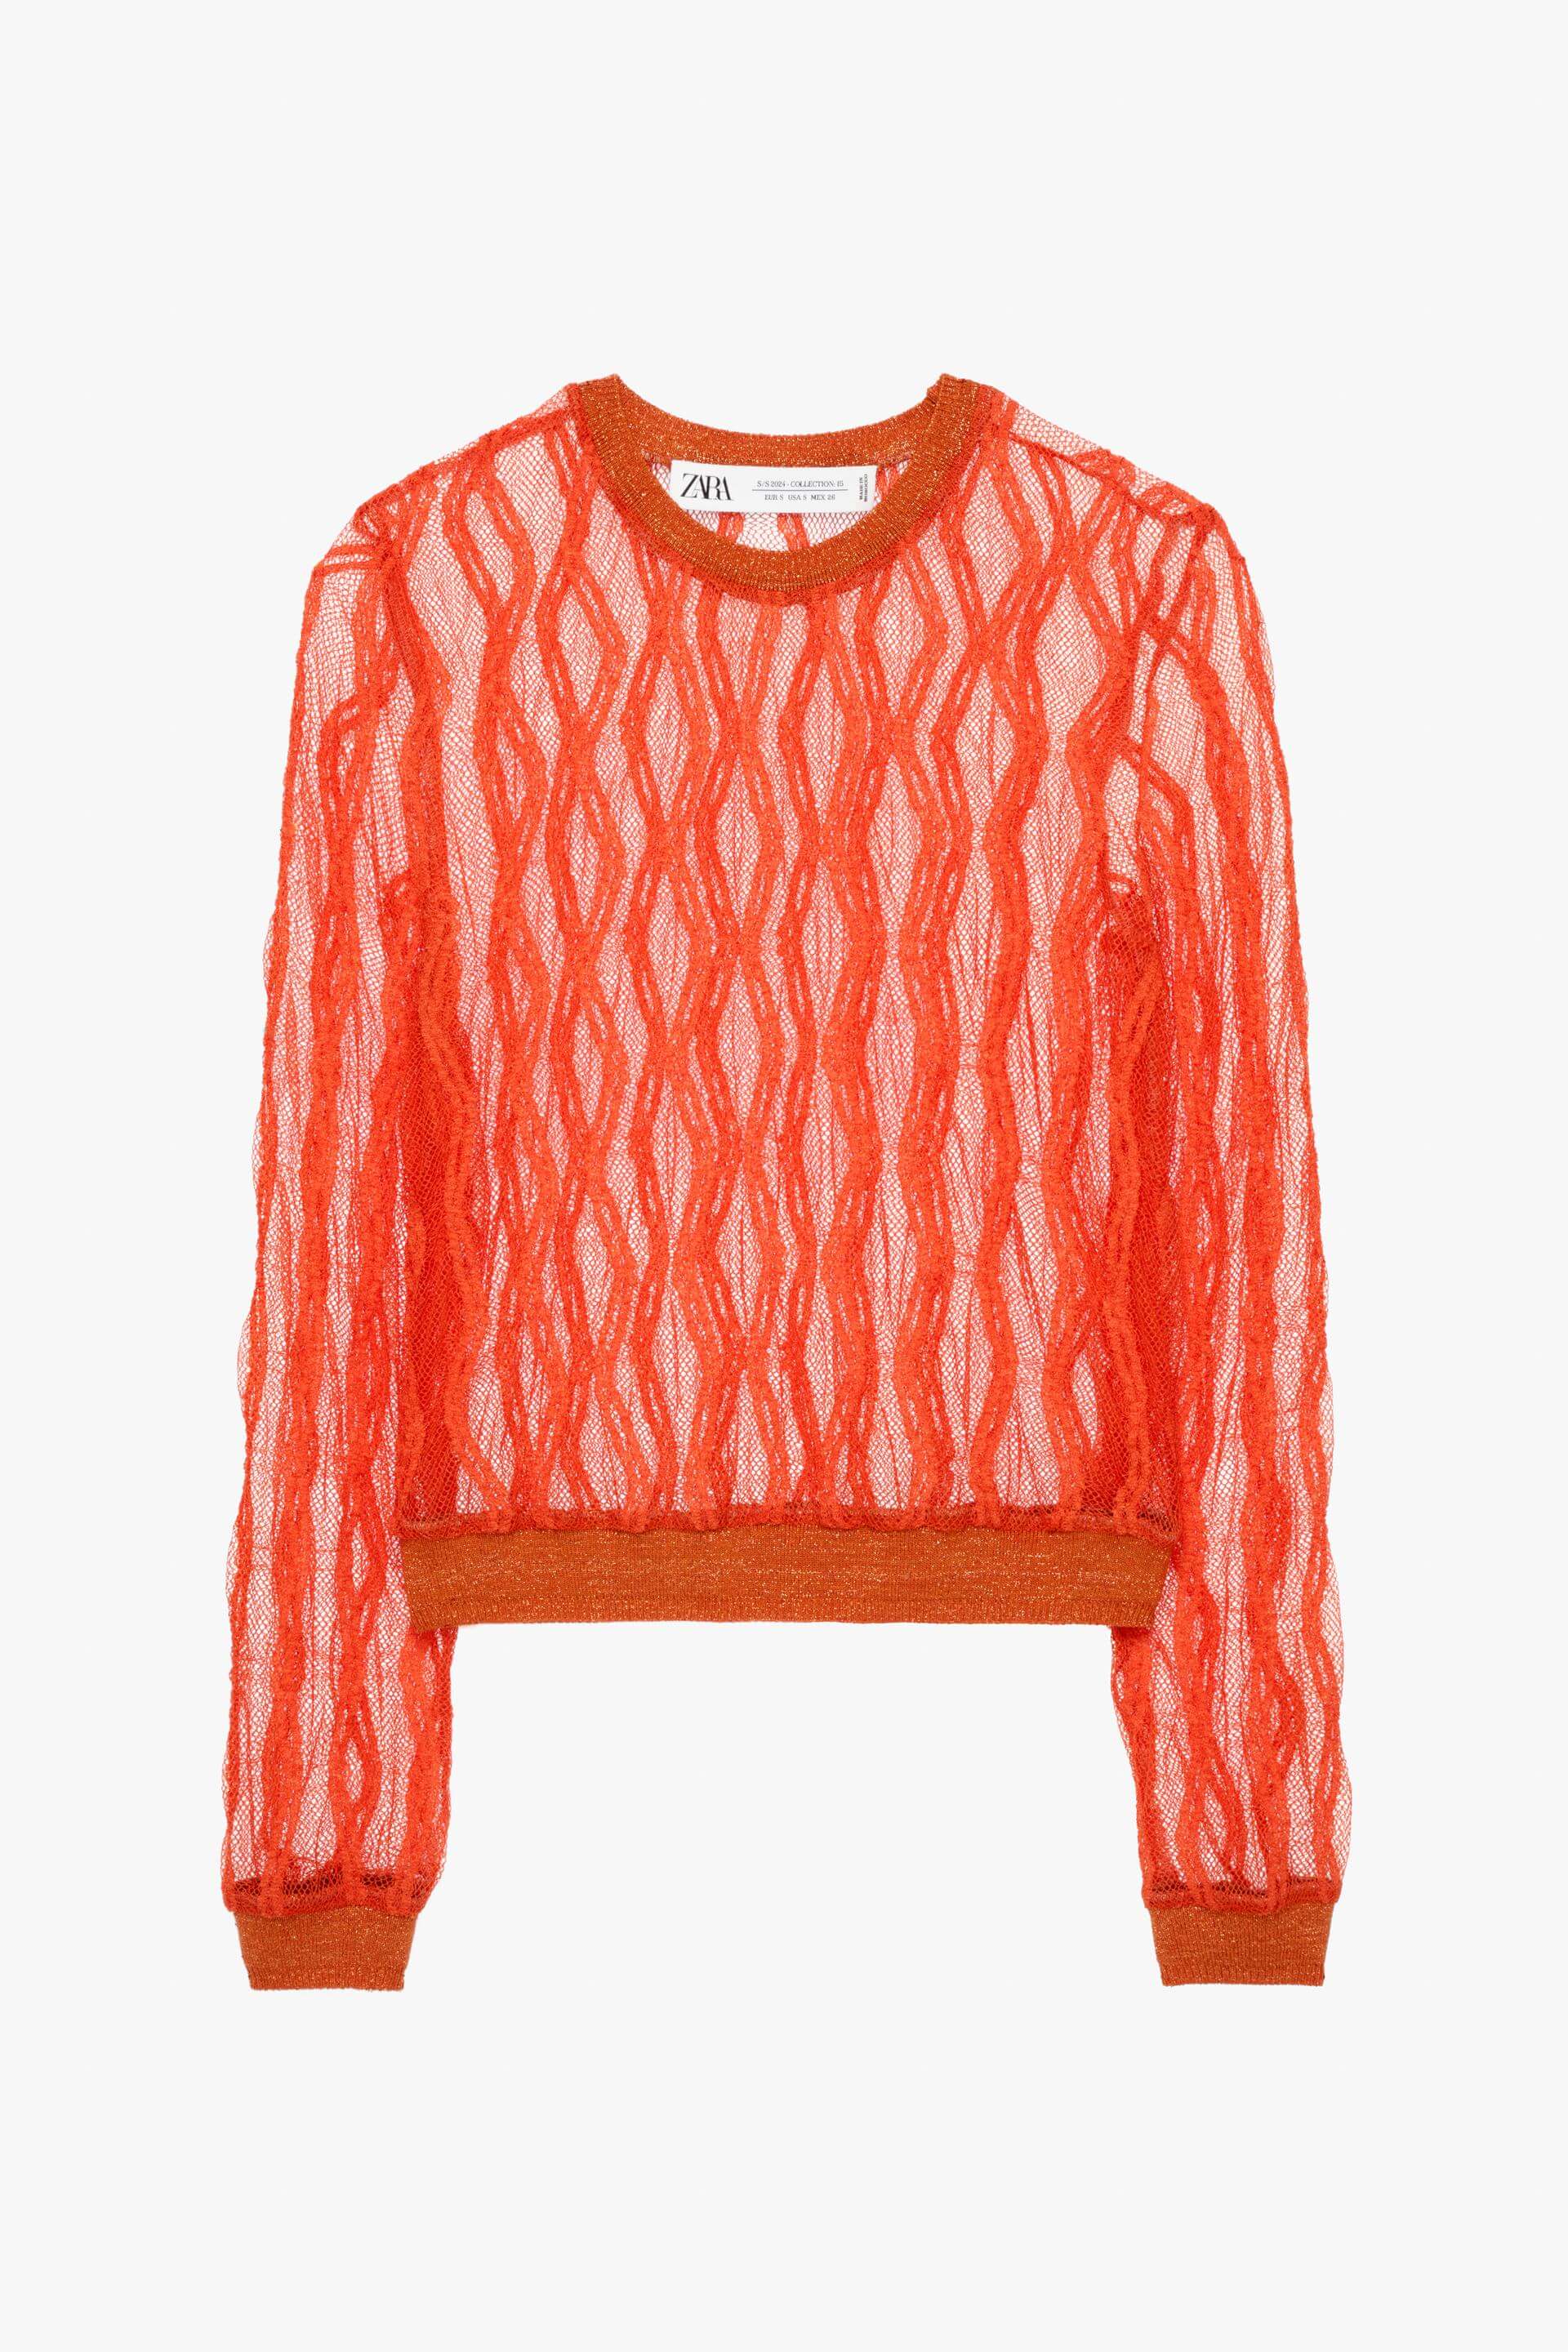 Топ Zara Knit - Limited Edition, оранжевый пиджак zara textured limited edition песочный